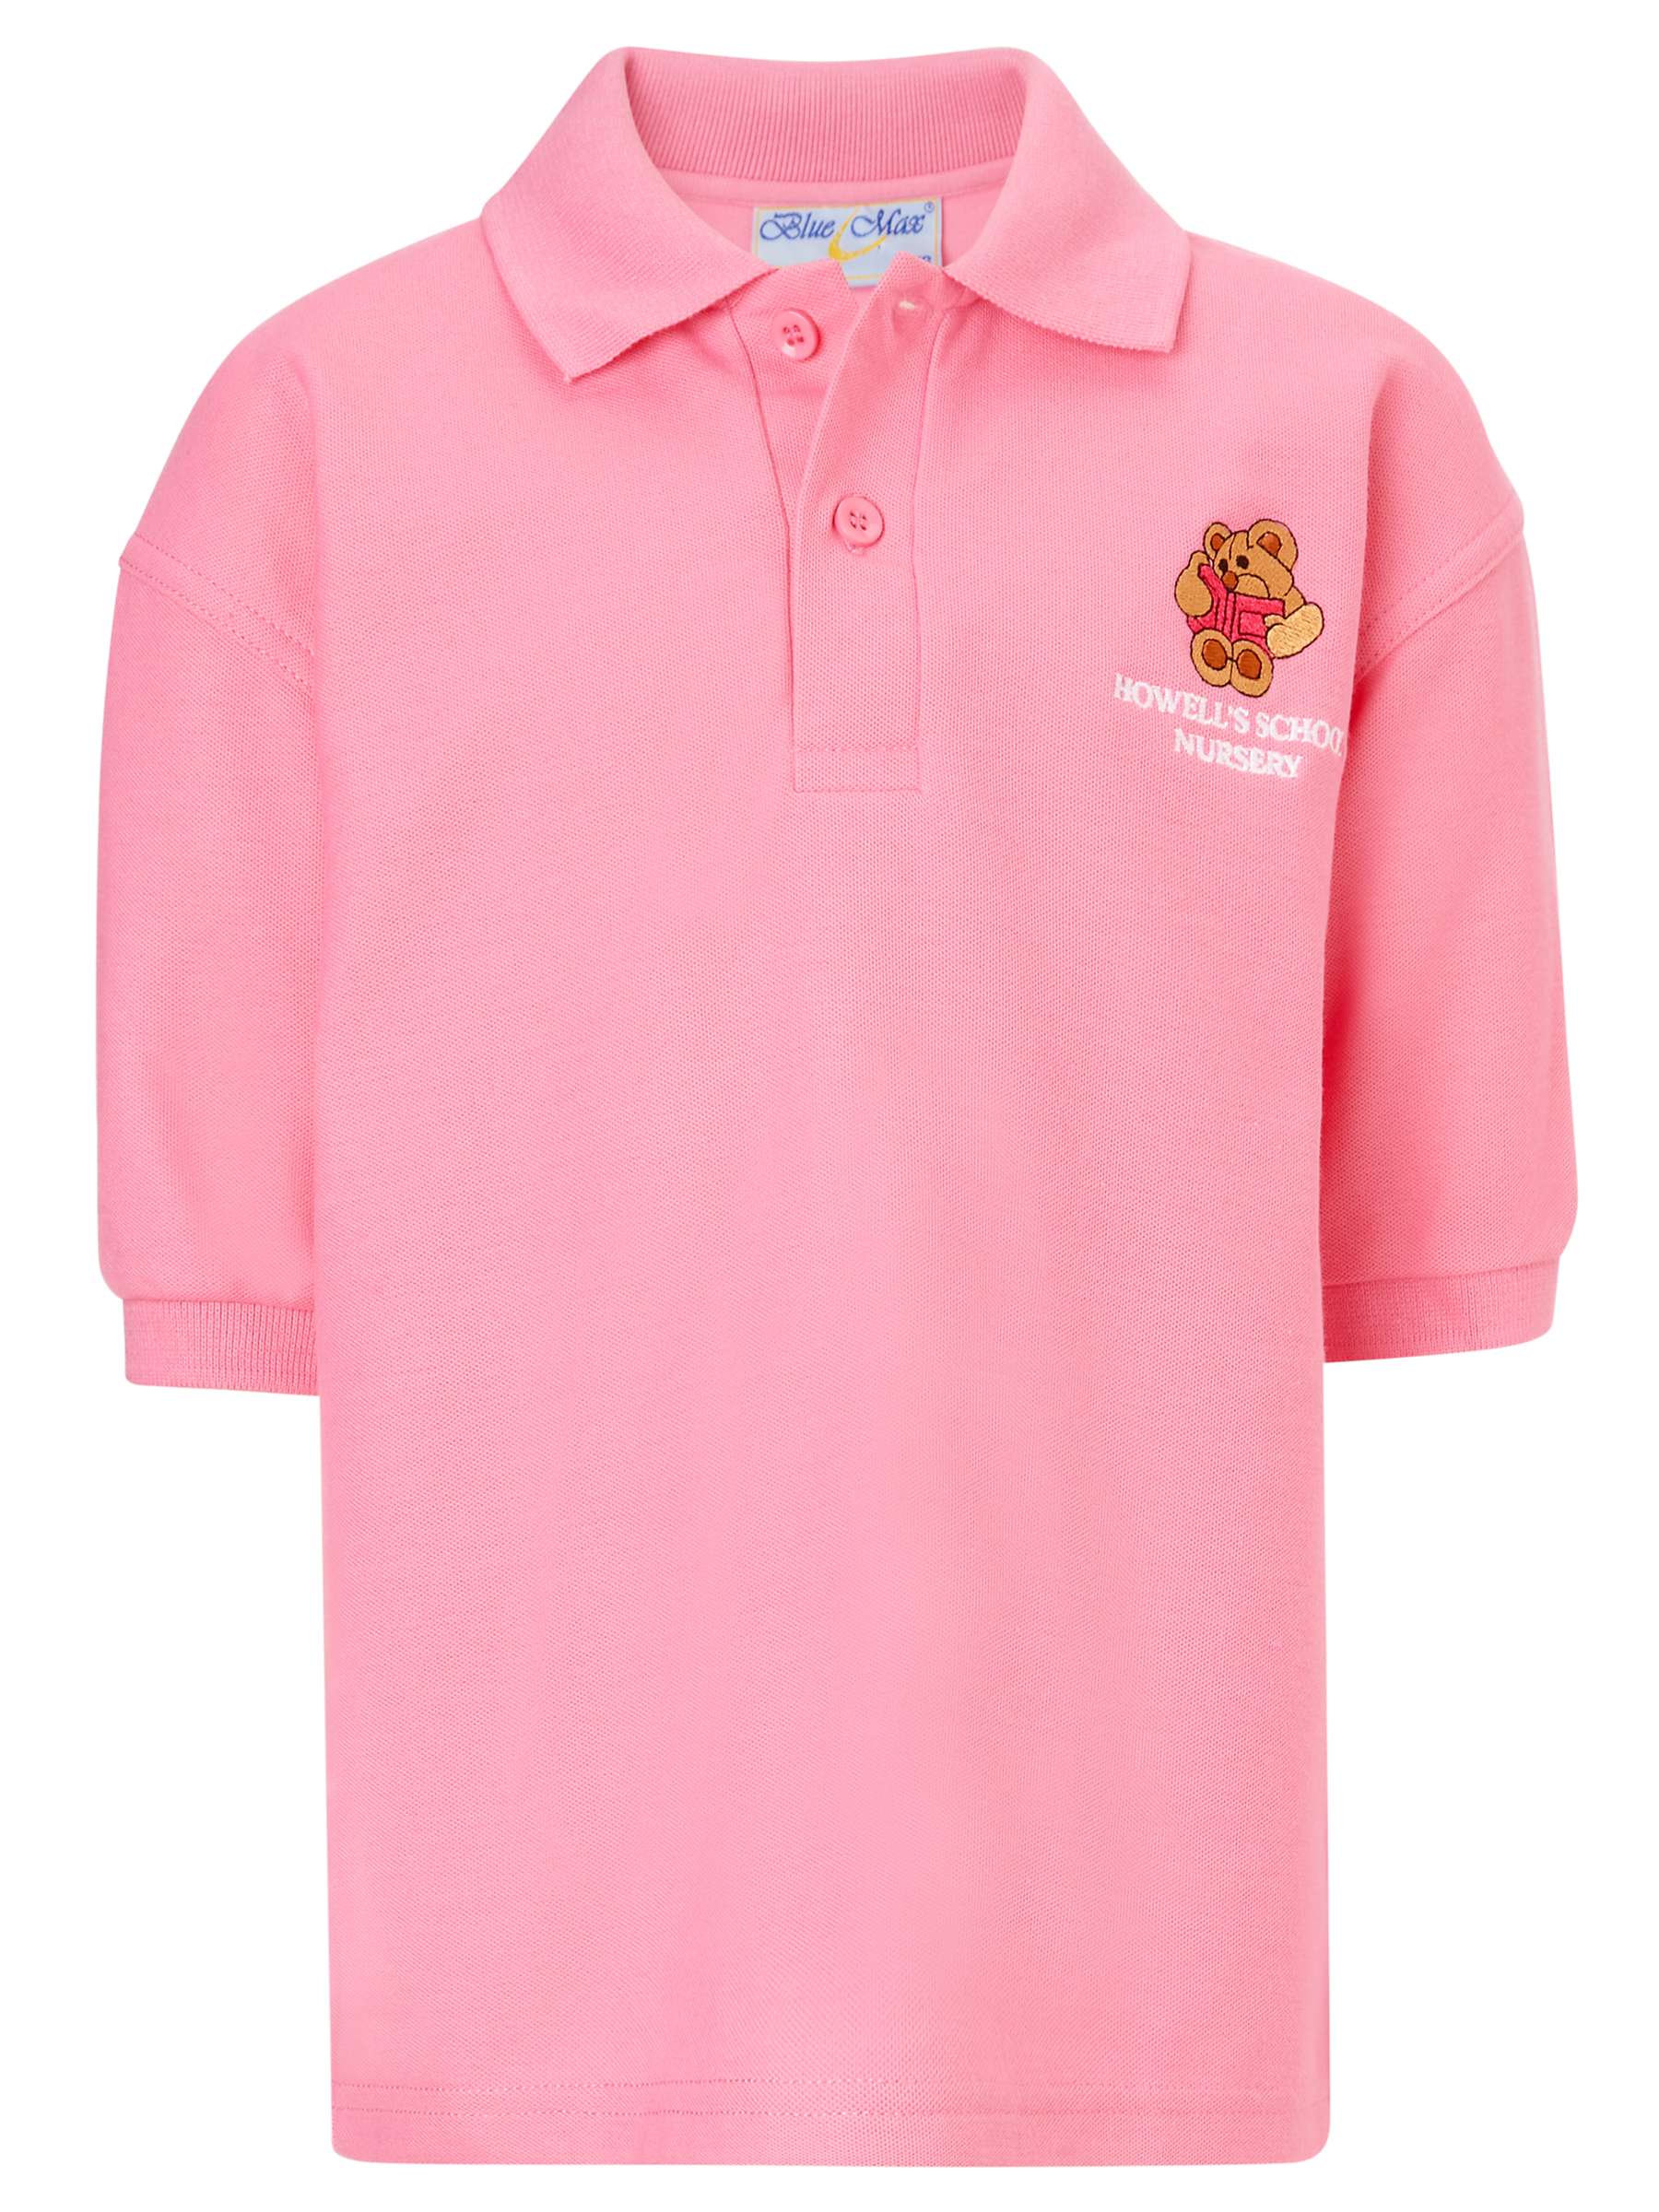 Buy Howell's School Nursery Polo Shirt, Pink Online at johnlewis.com